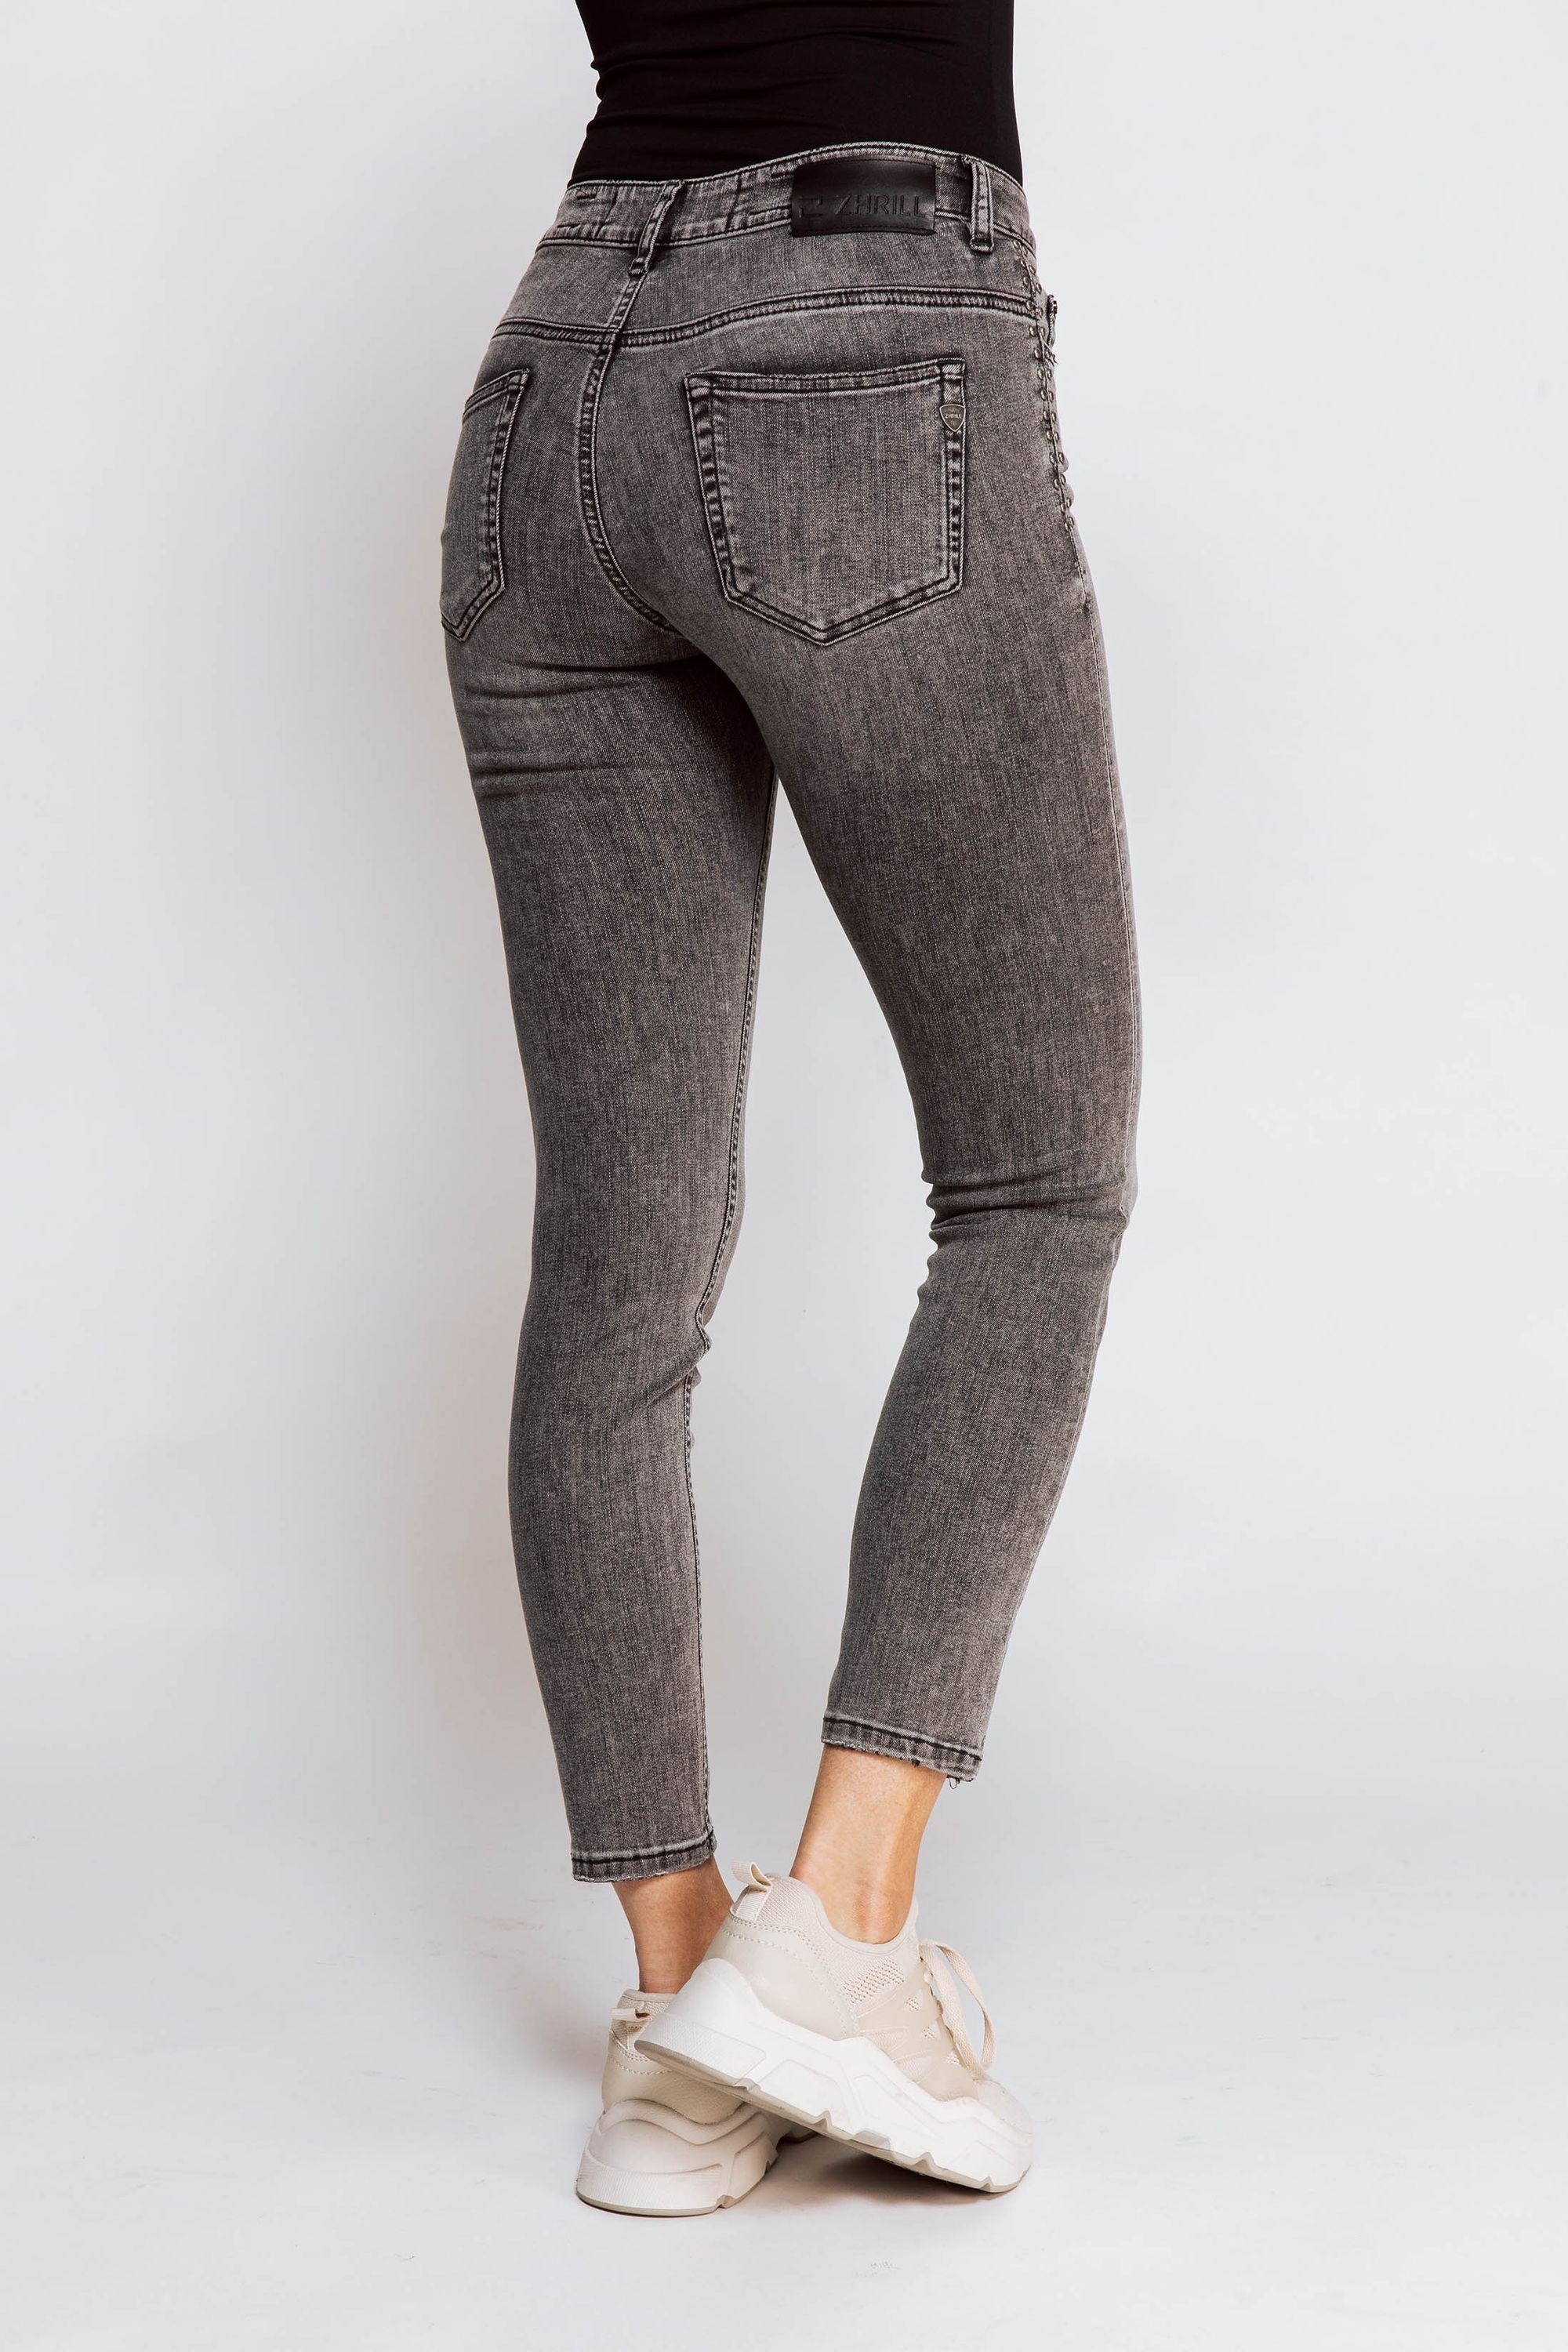 Zhrill Skinny-fit-Jeans Skinny Jeans DAFFY angenehmer Grau Tragekomfort